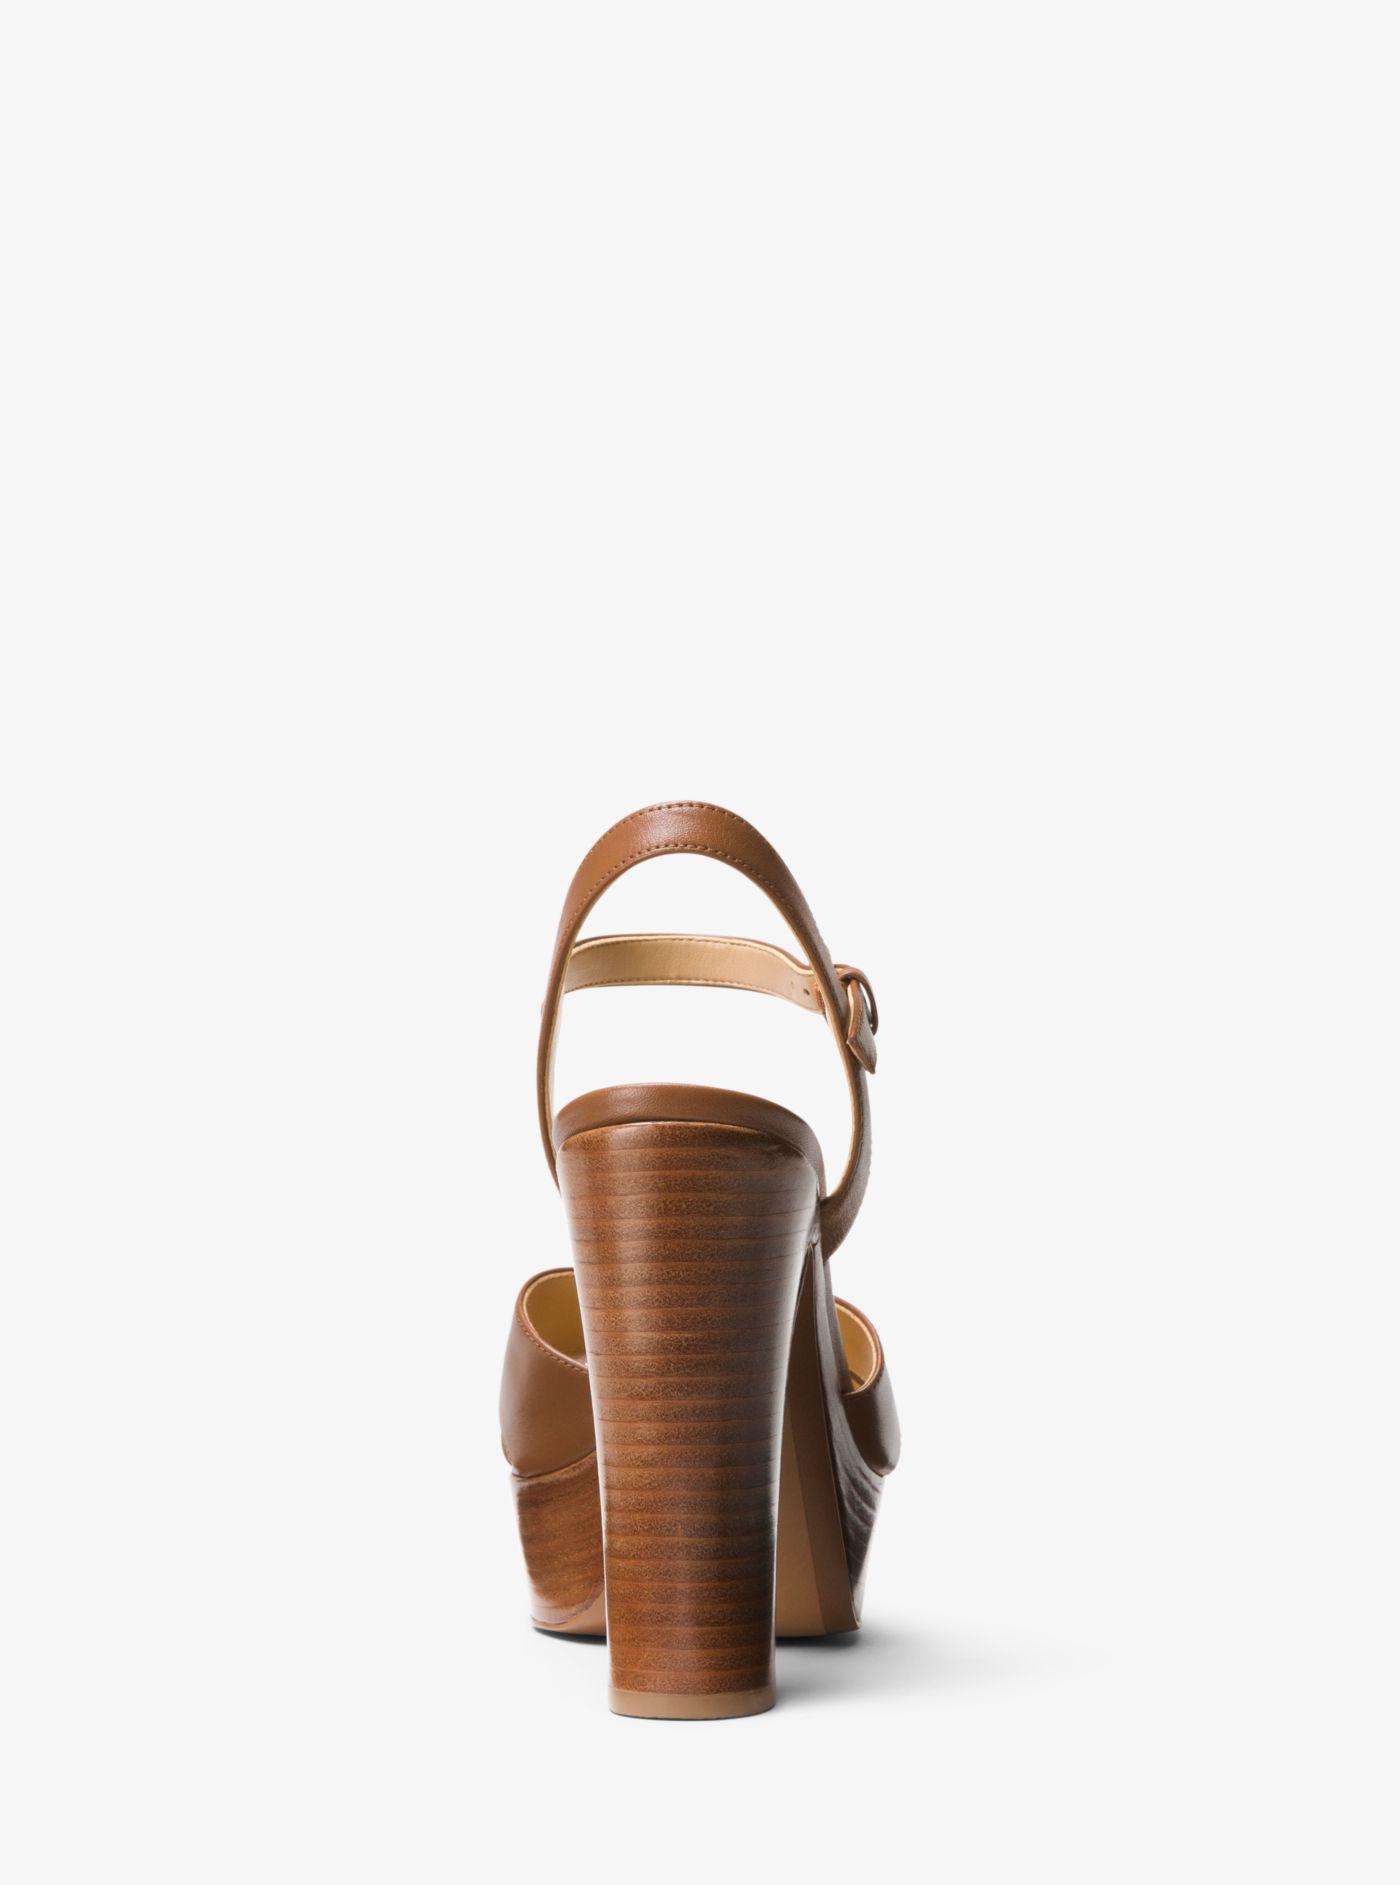 sia leather platform sandal